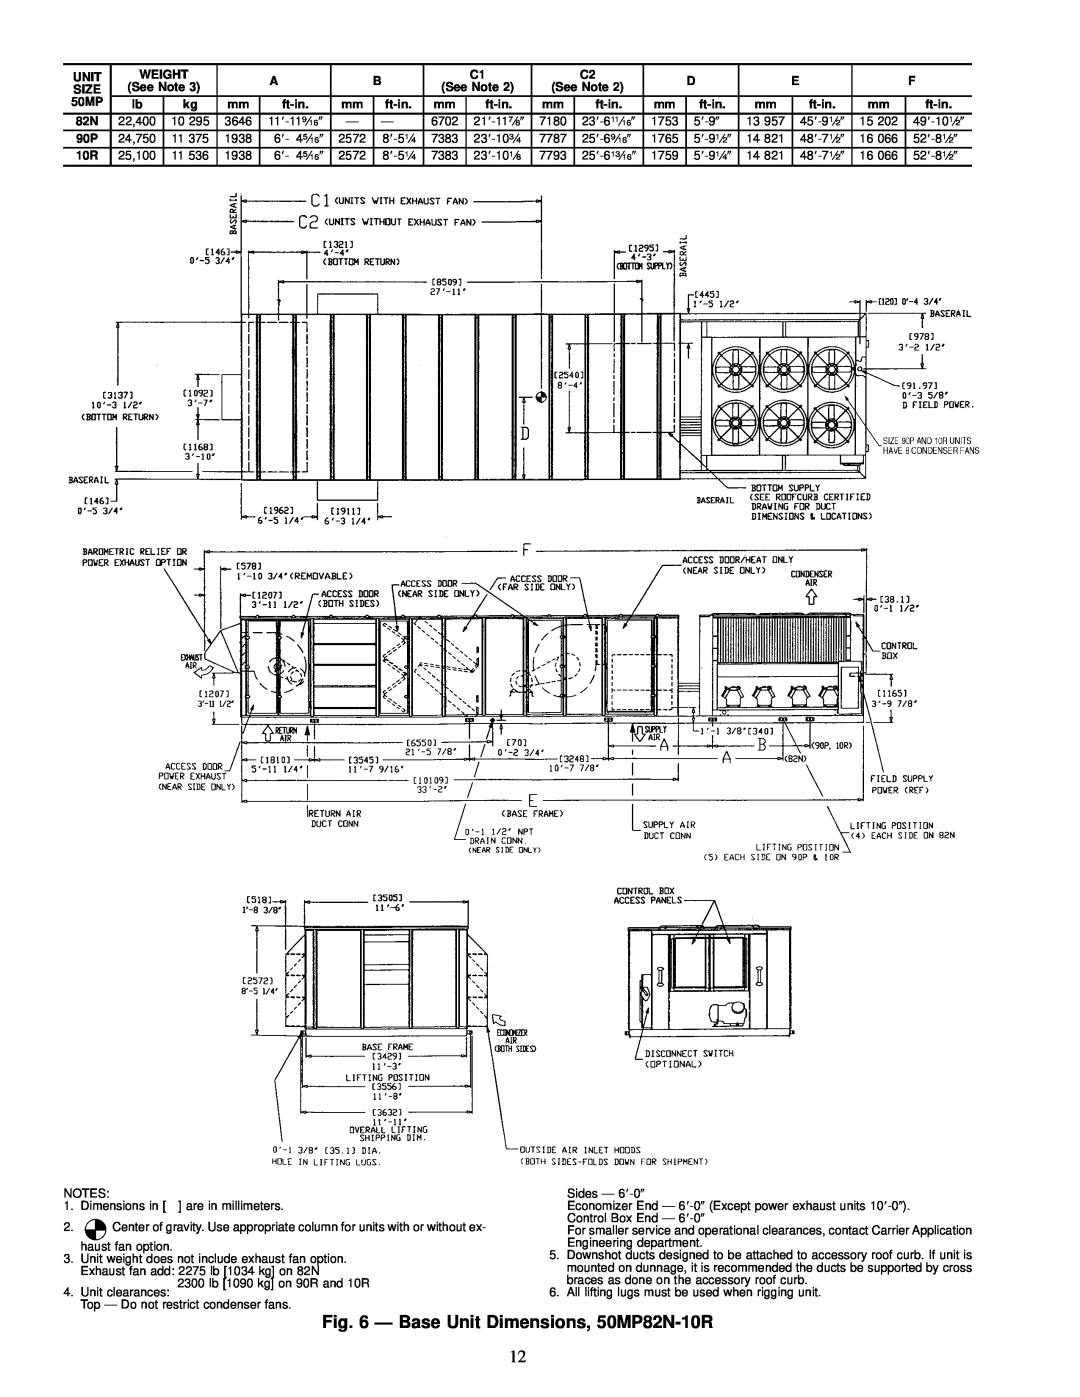 Carrier MPE62L-10R, 50MP62L-10R, 48MPD specifications Ð Base Unit Dimensions, 50MP82N-10R 